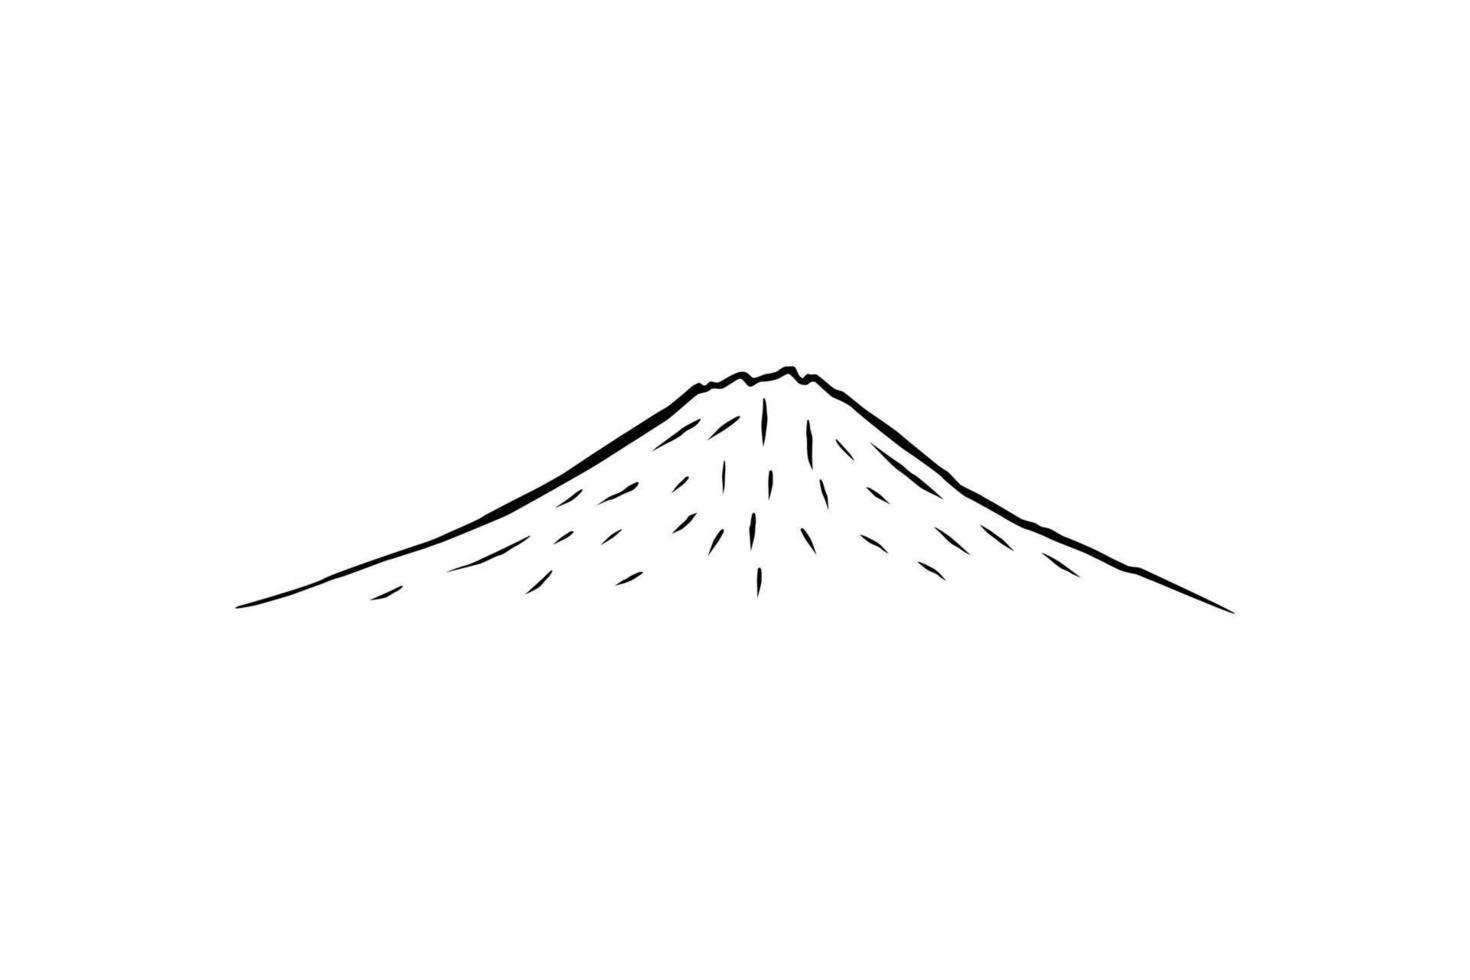 Simple Line Art of the Mountain Silhouette for Logo, Pictogram, Art Illustration, Apps, Website or Graphic Design Element. Vector Illustration